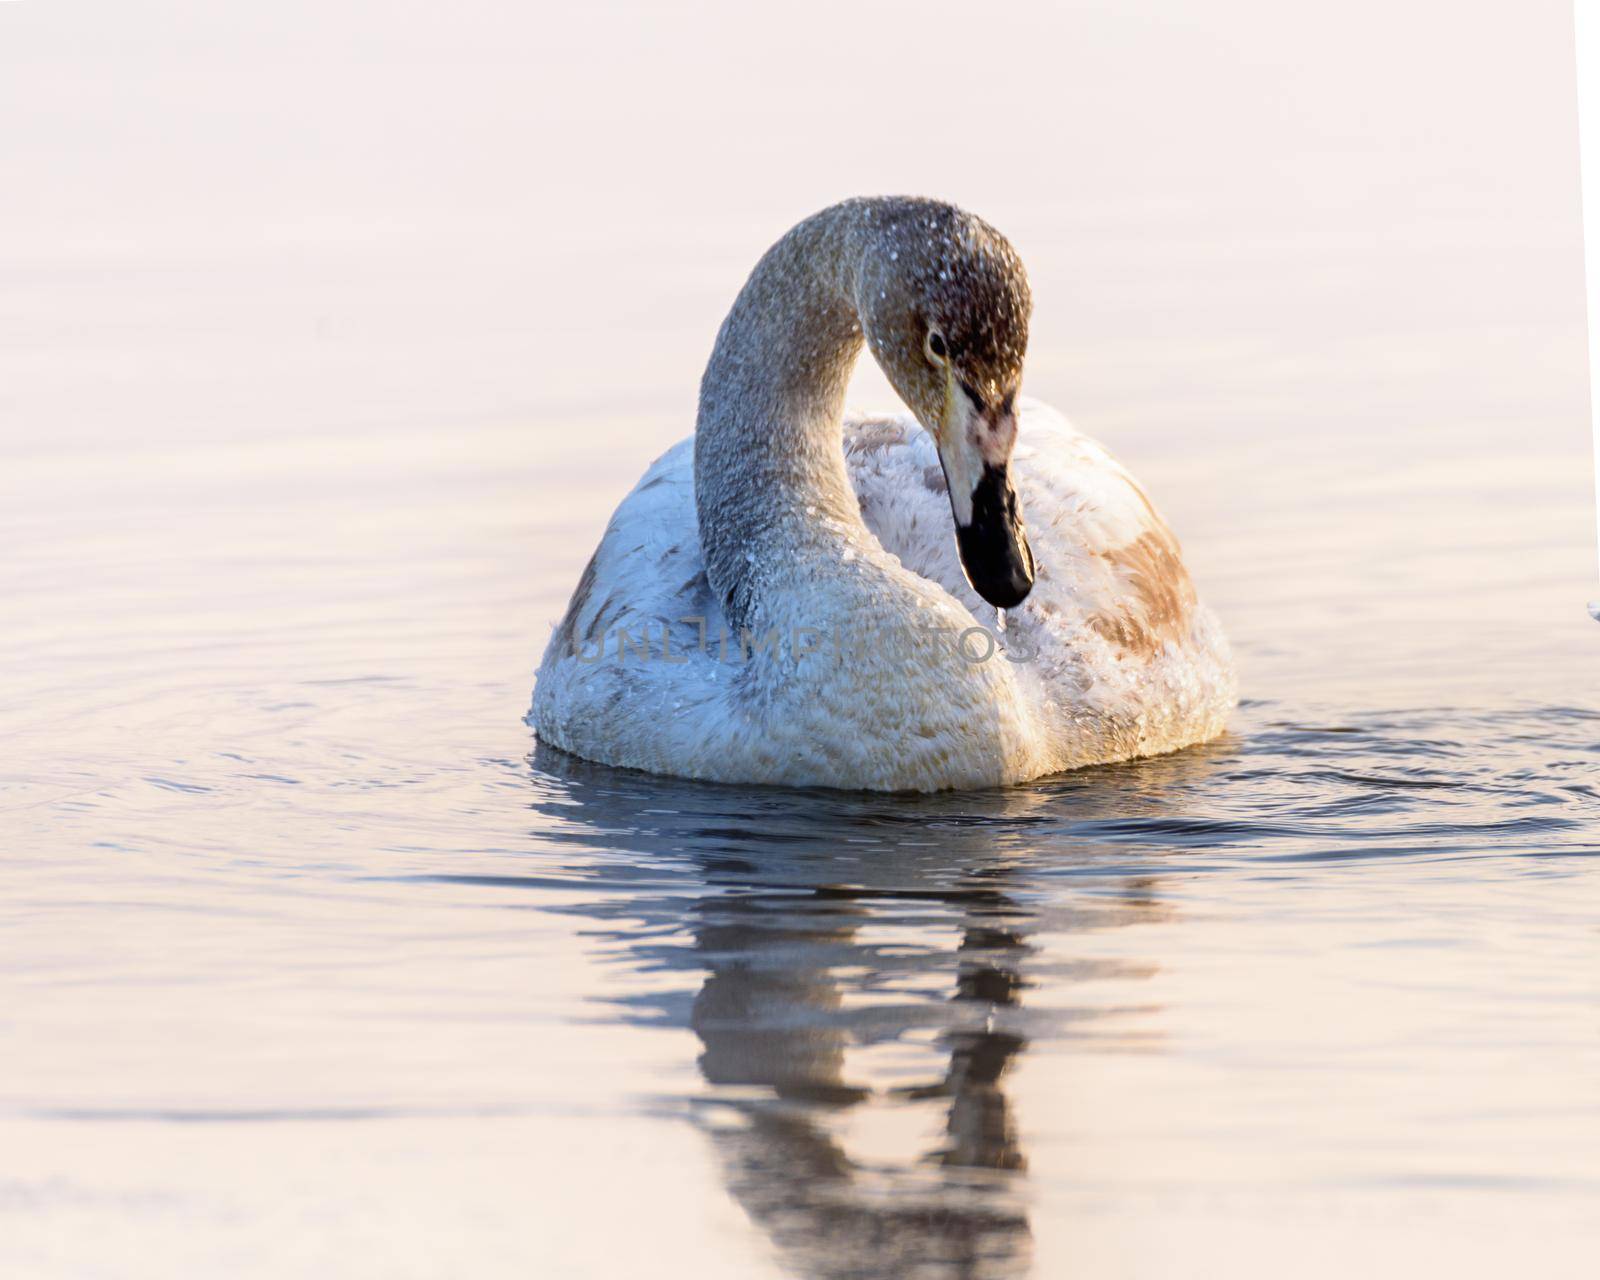 Whooper swans Cygnus cygnus swim on the water, close-up